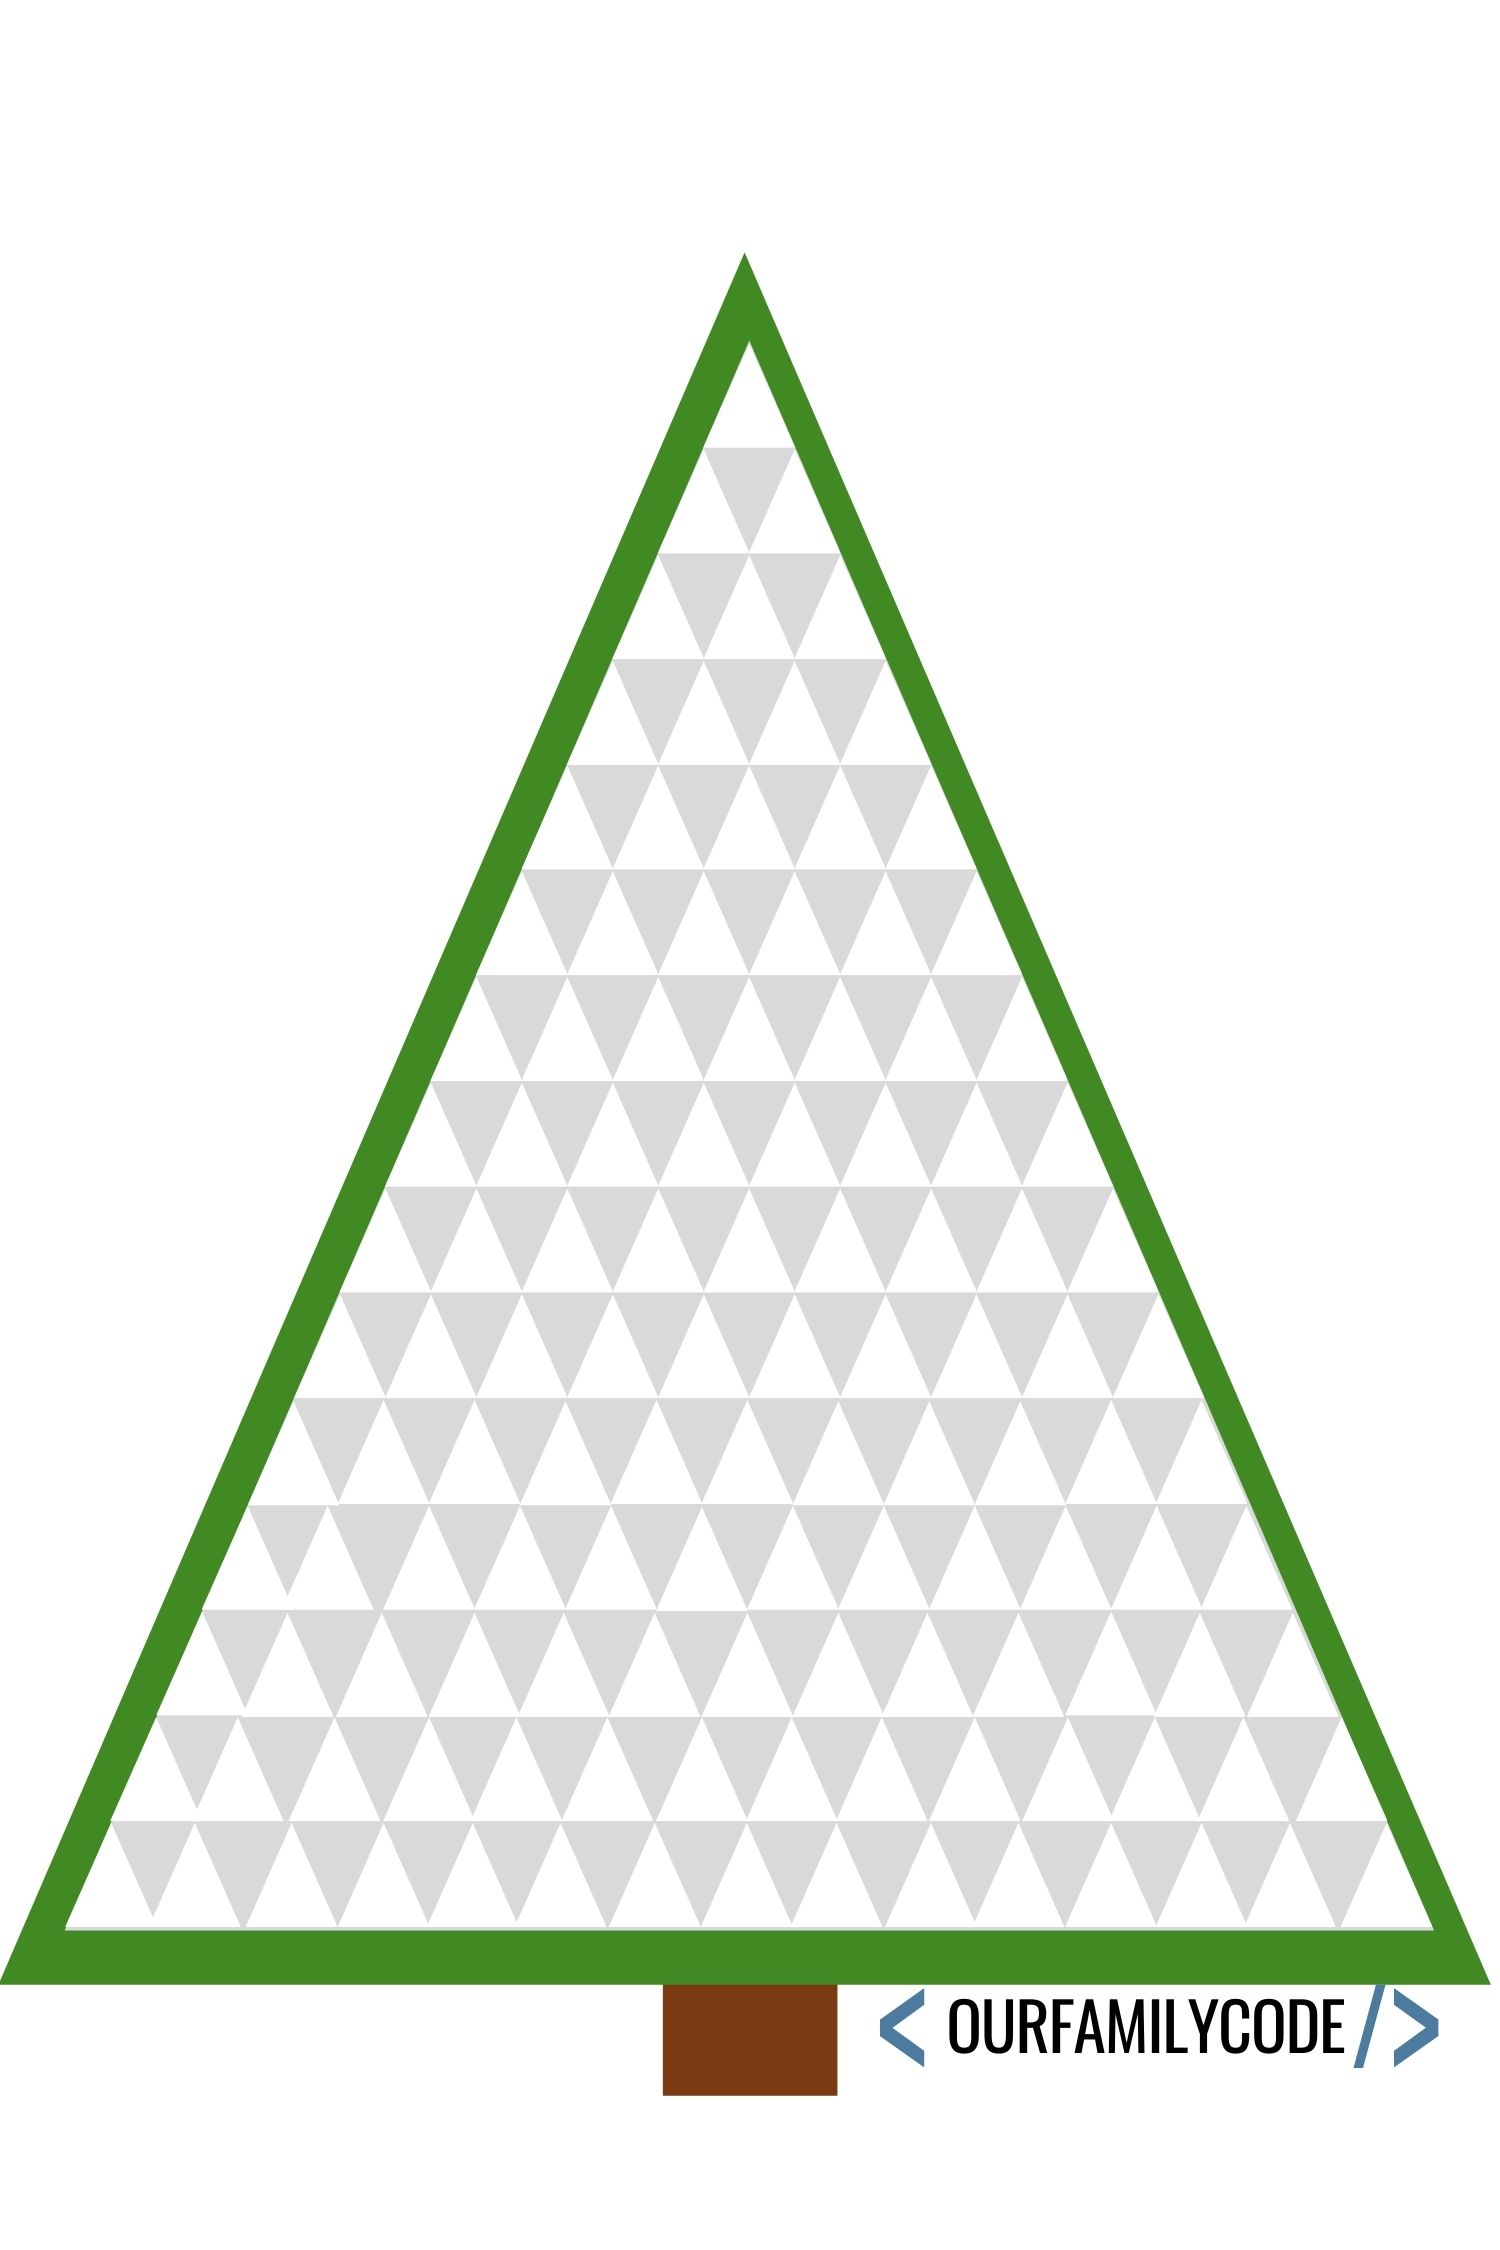 Pascal's Triangle Christmas Tree Patterns Math Activity